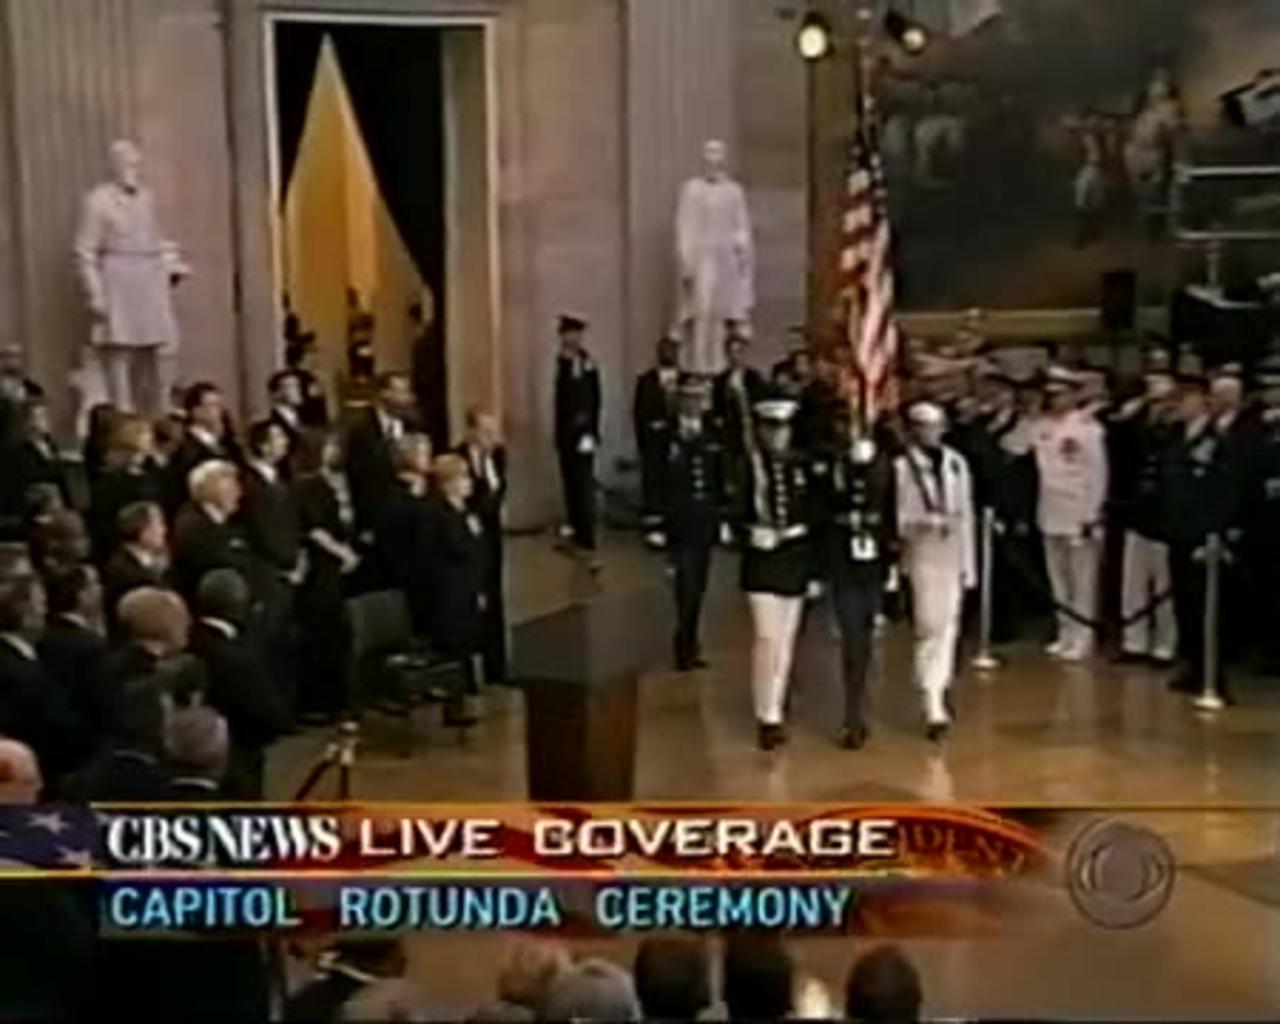 June 11, 2004 - Former VP Dan Quayle at Rotunda Ceremony for Ronald Reagan Funeral